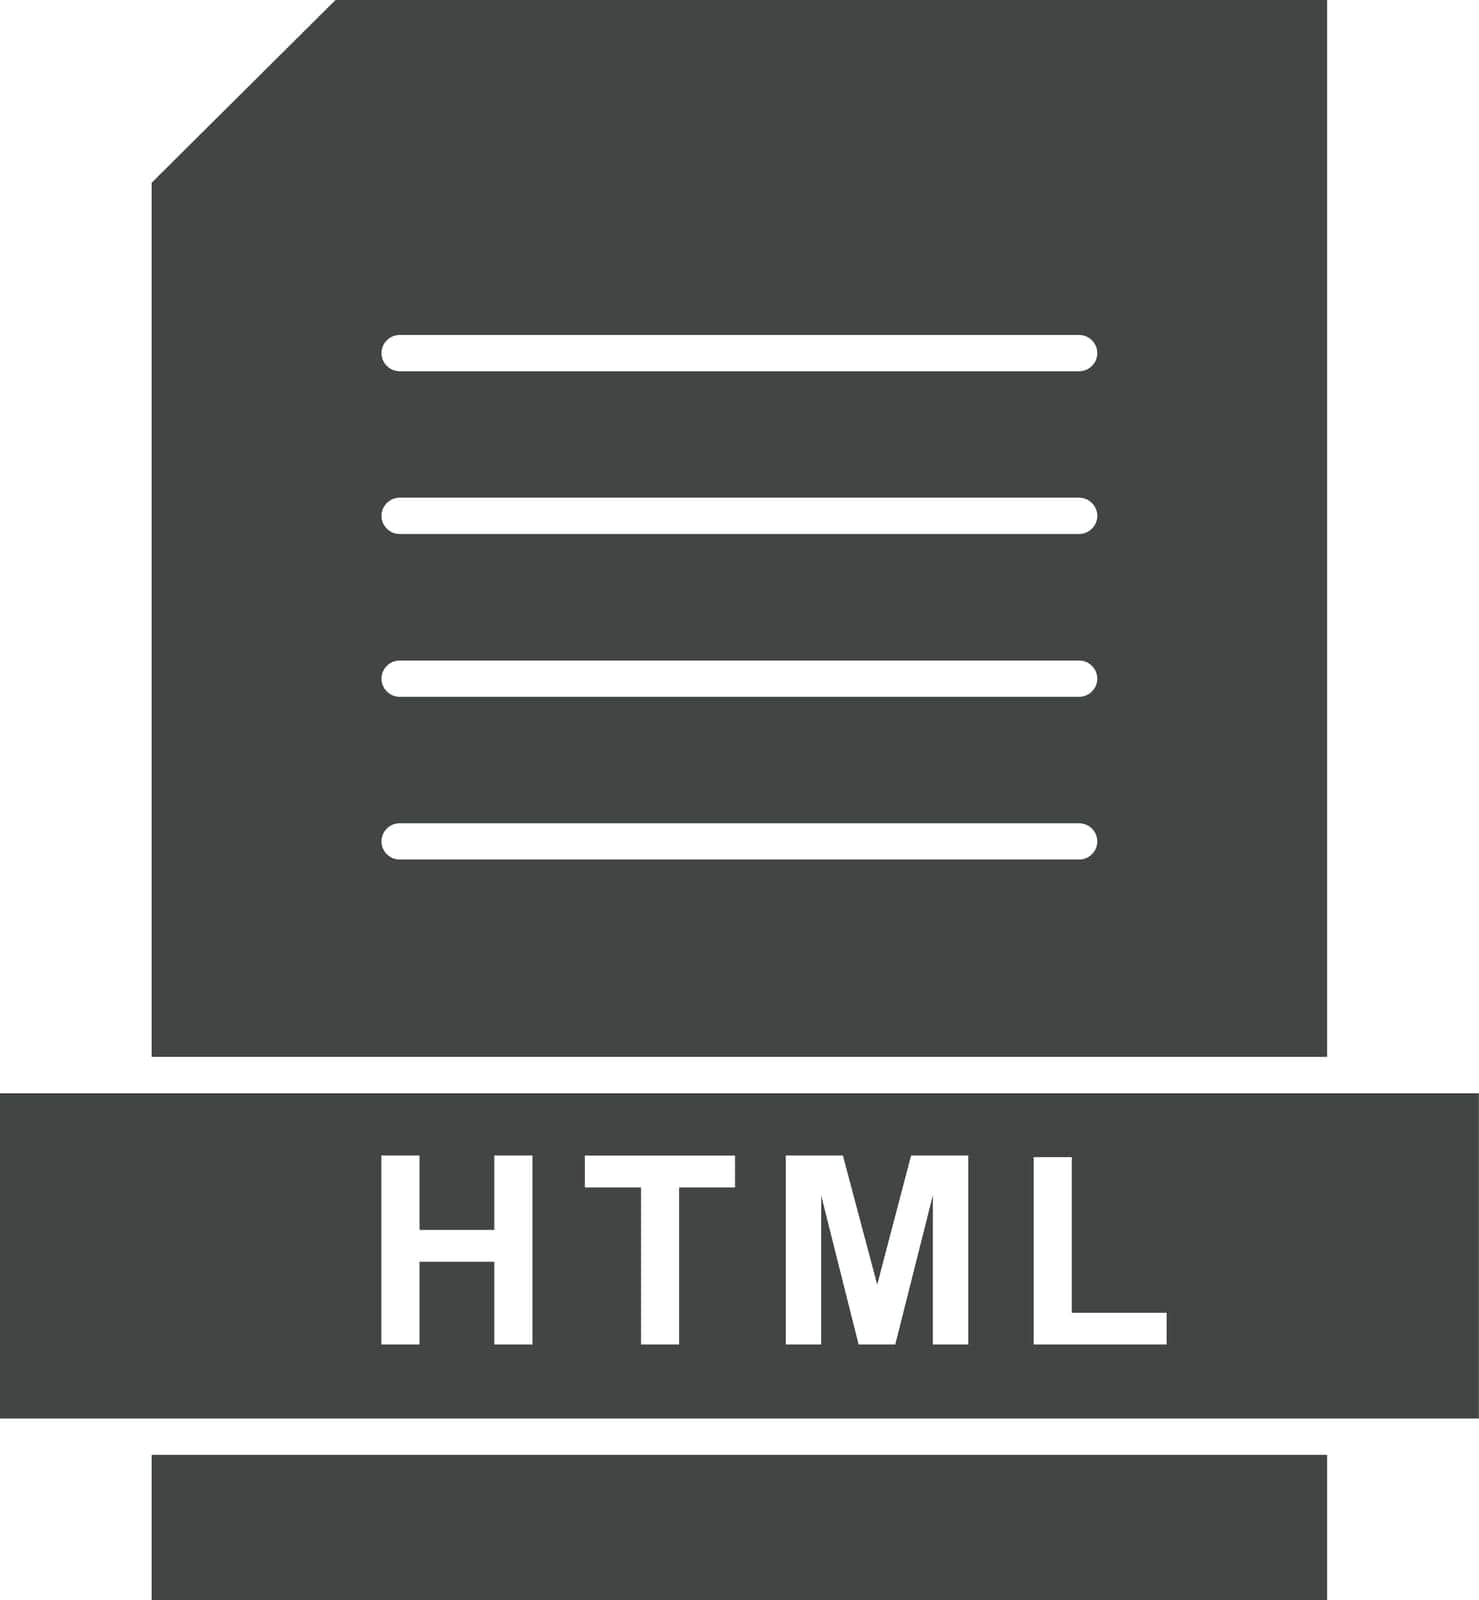 HTML icon vector image. by ICONBUNNY